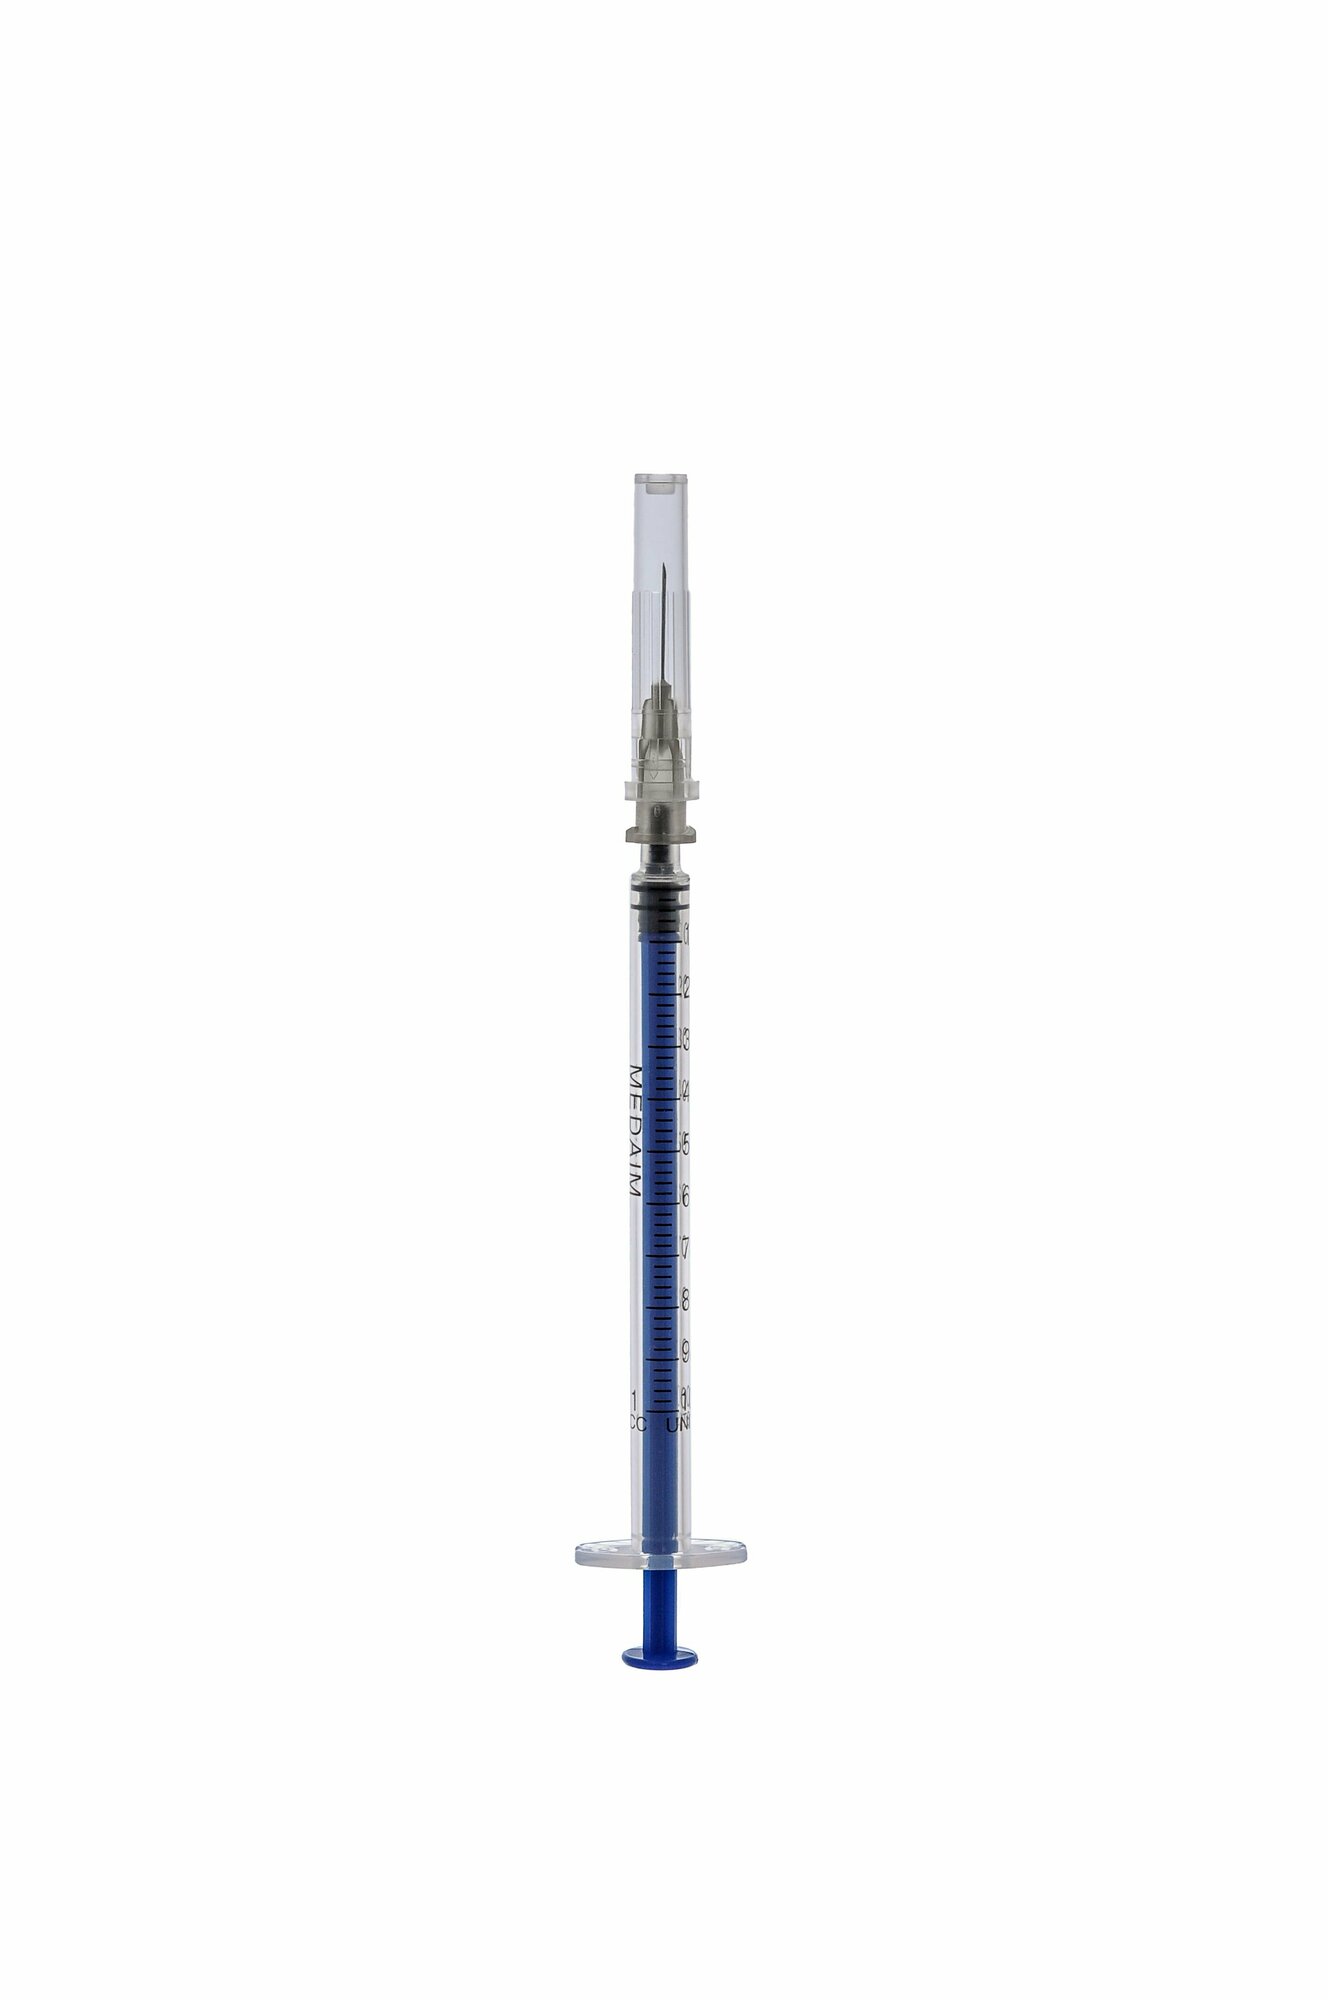 Шприц инсулиновый 1 мл 100 шт/уп. U-100 размер 26G (игла 0,45 х 12 мм)